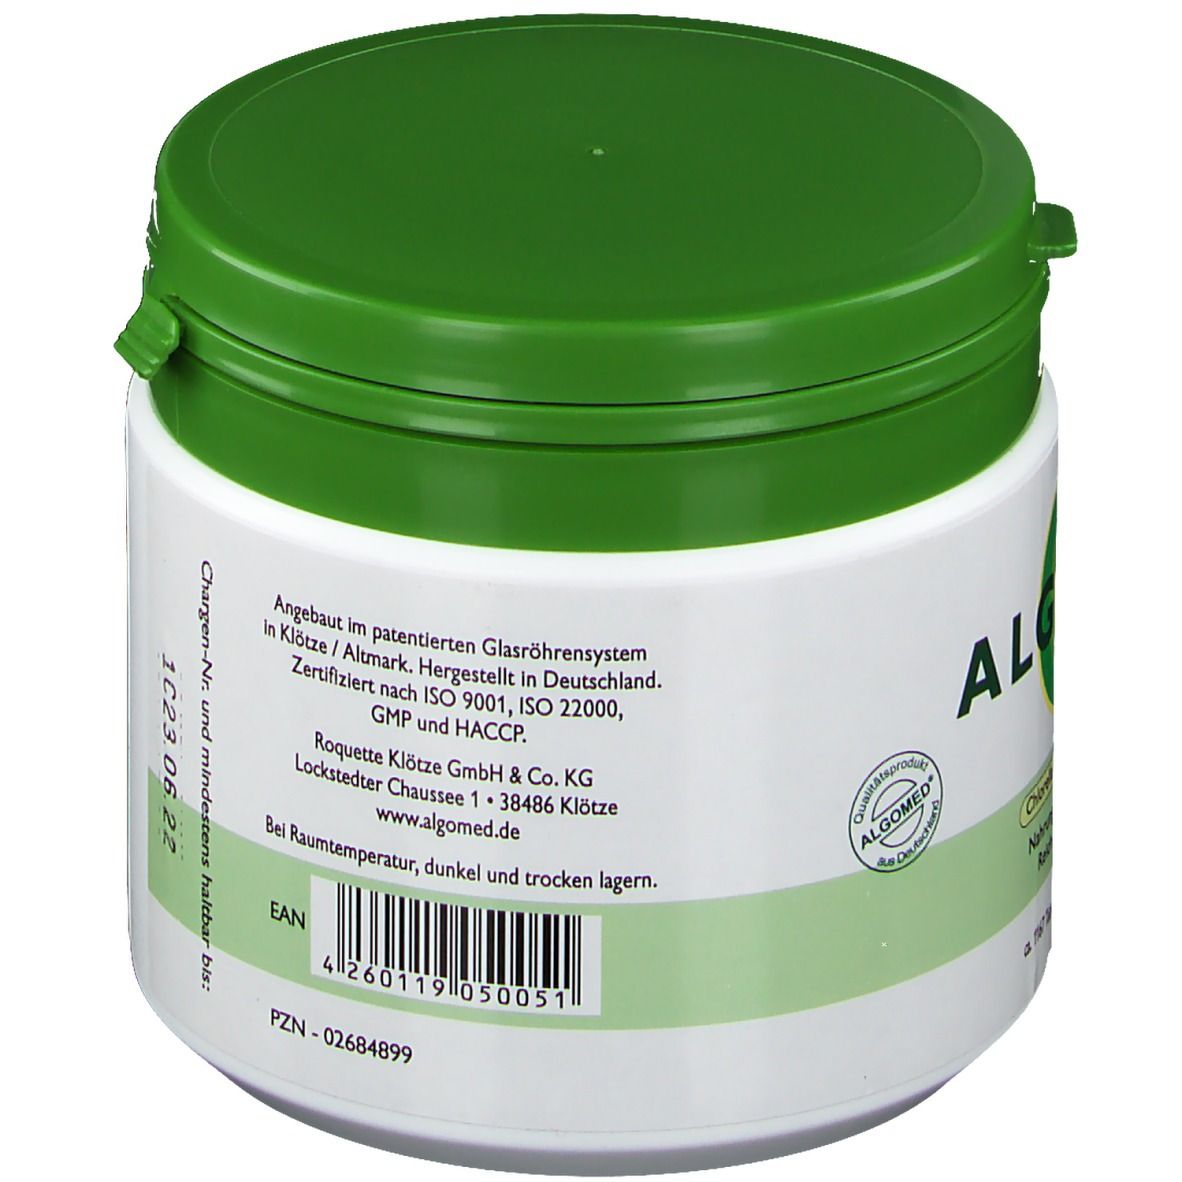 Algomed® Chlorella 300 mg